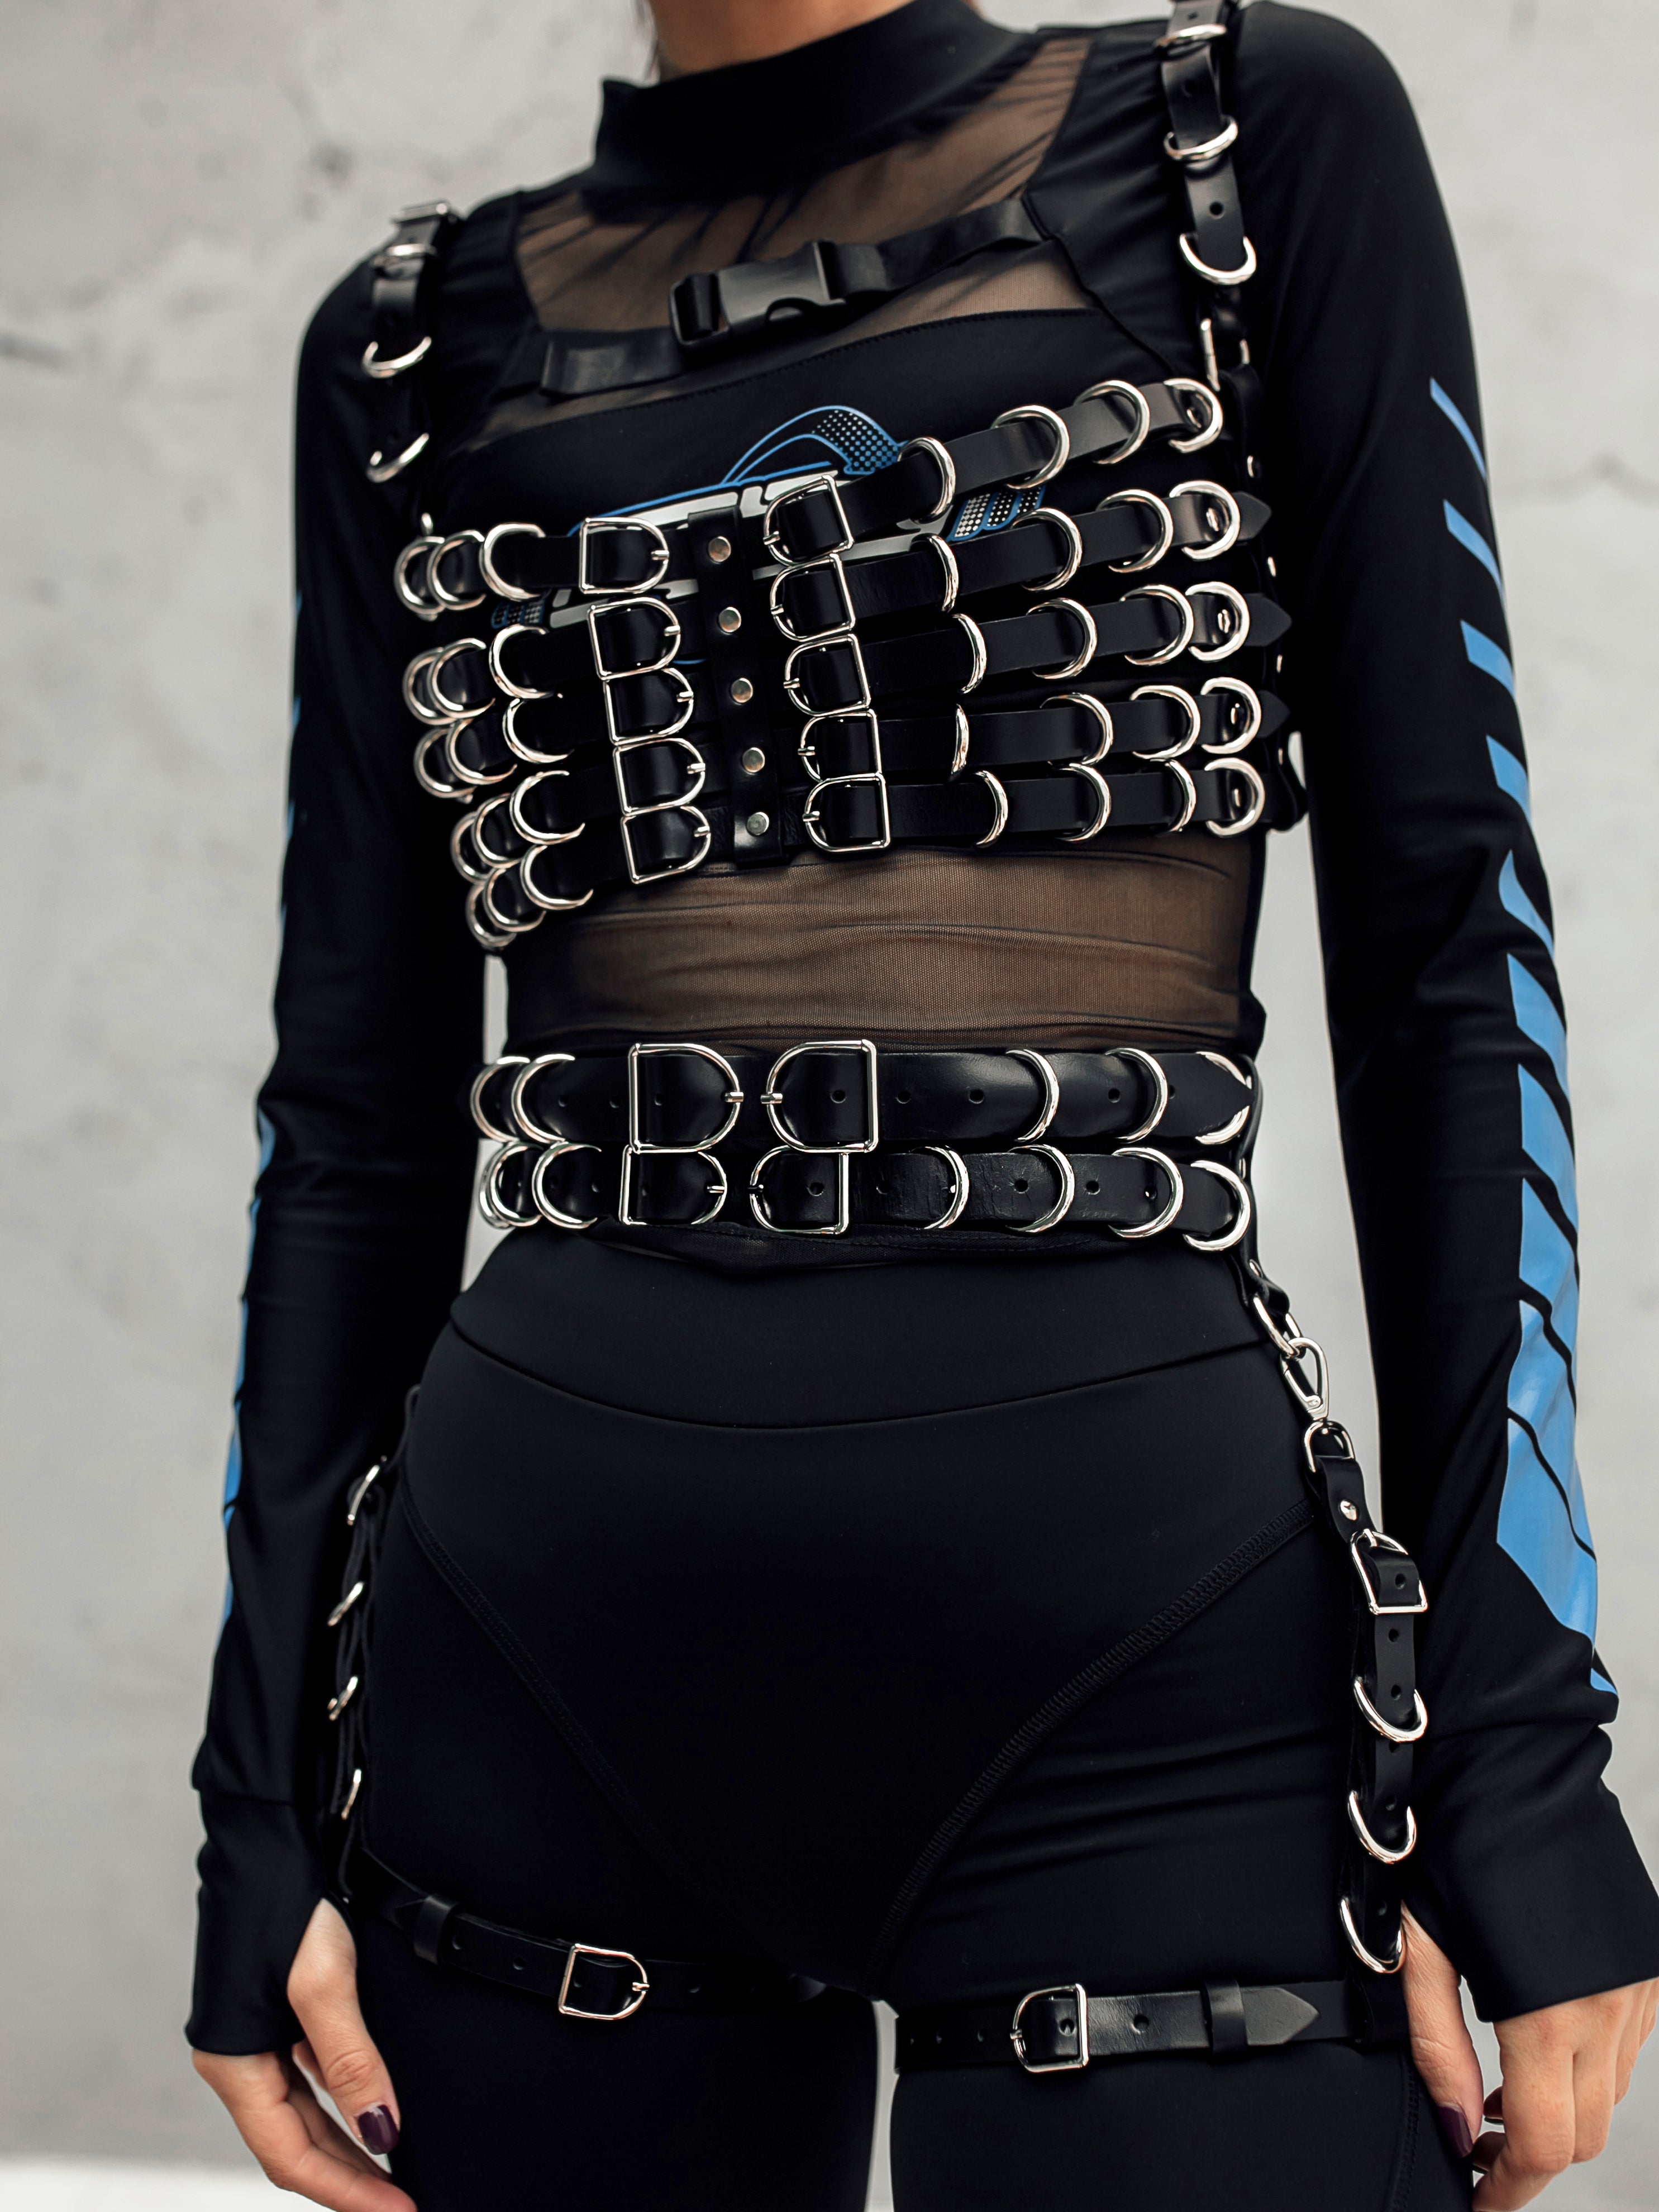 Venus Garter Belt - buy online, Leather body harness in Bleak&Sleek, USA